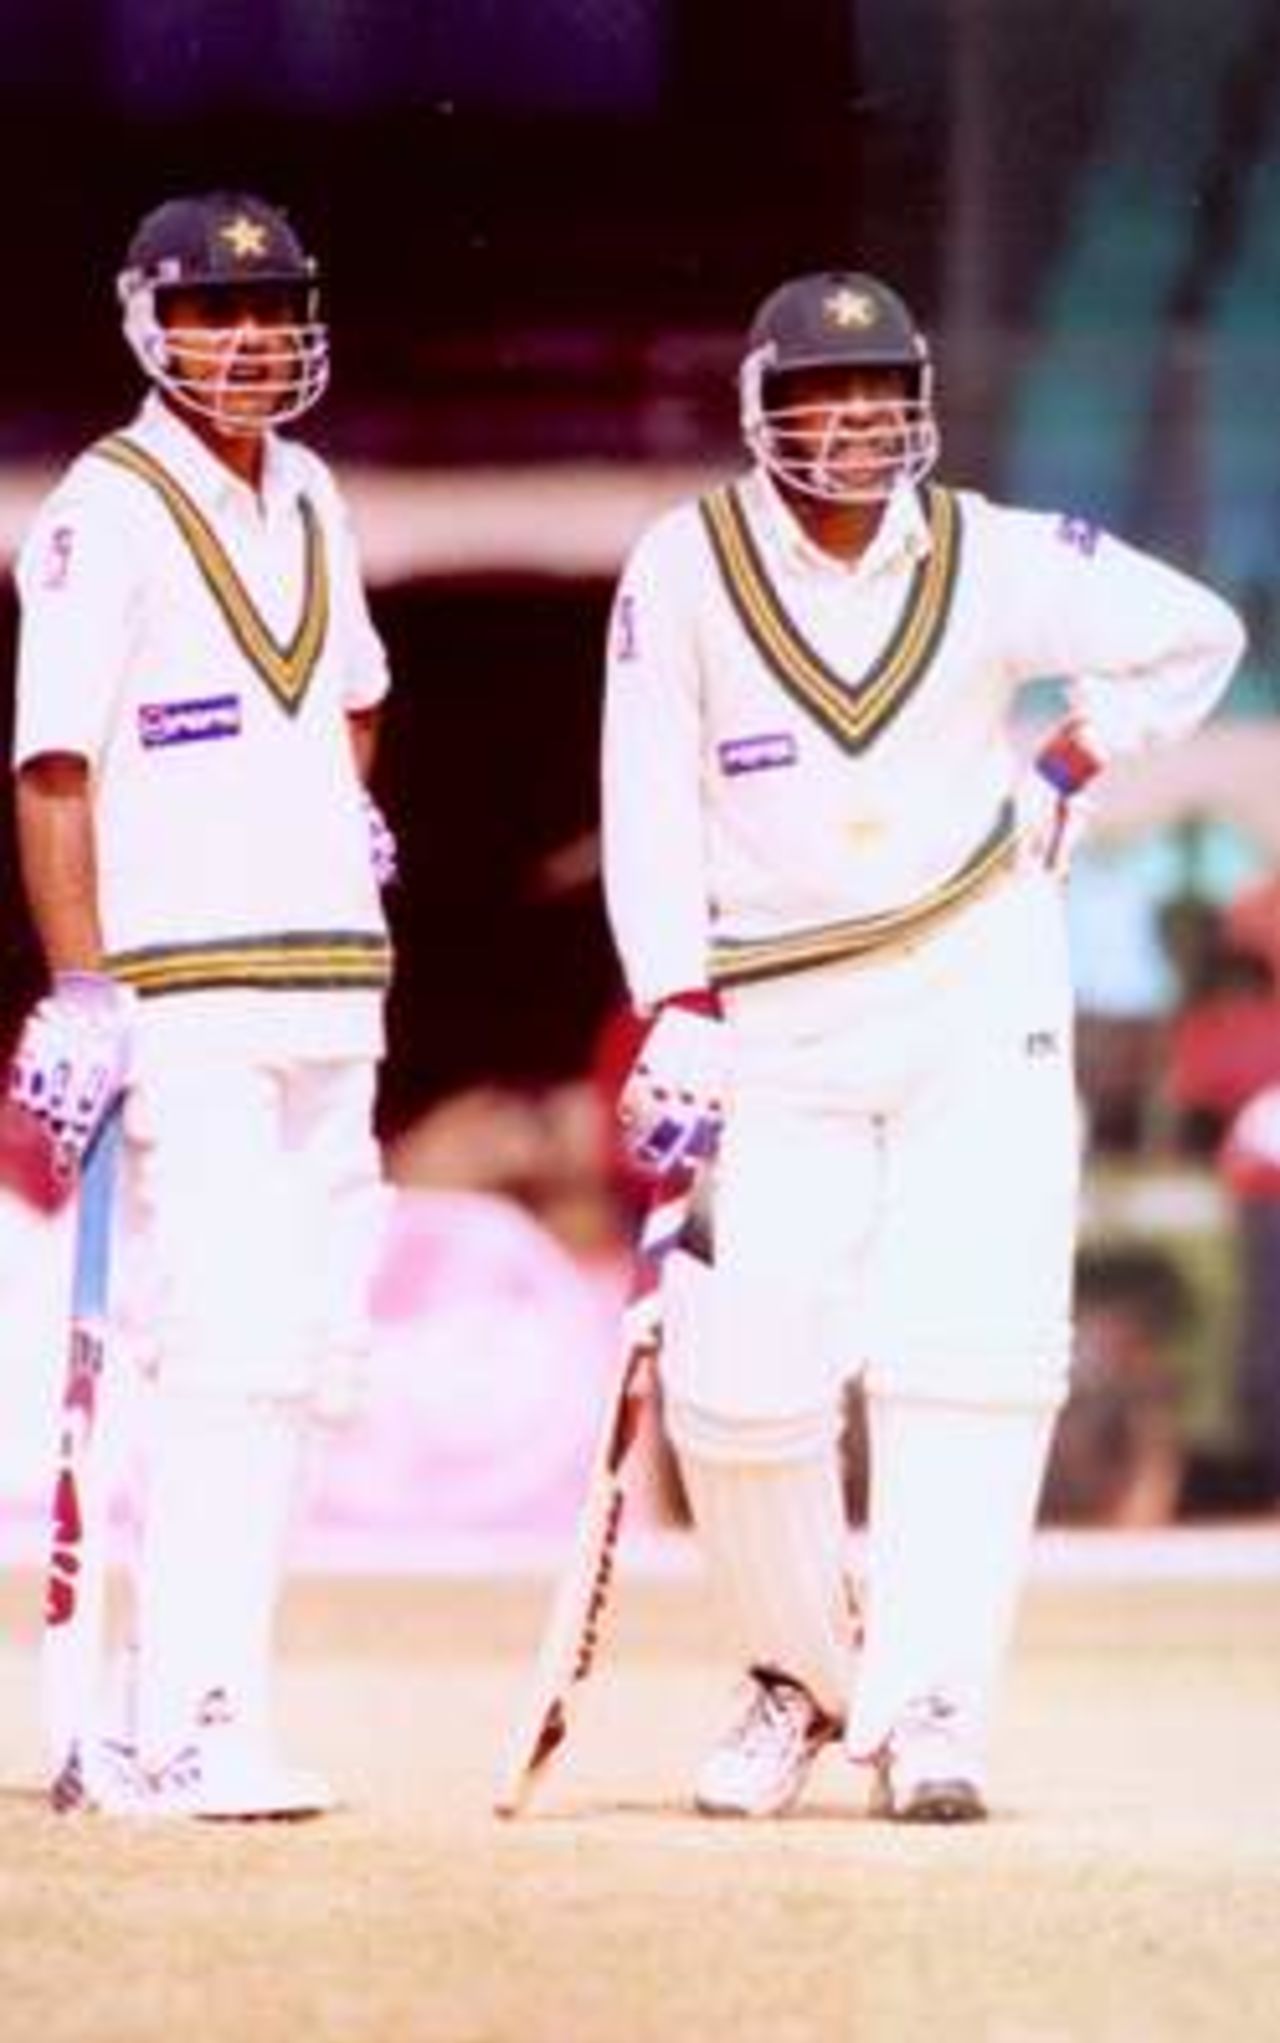 Abdur Razzaq and Rashid Latif are looking at 3rd umpire's signal at Dhaka Test